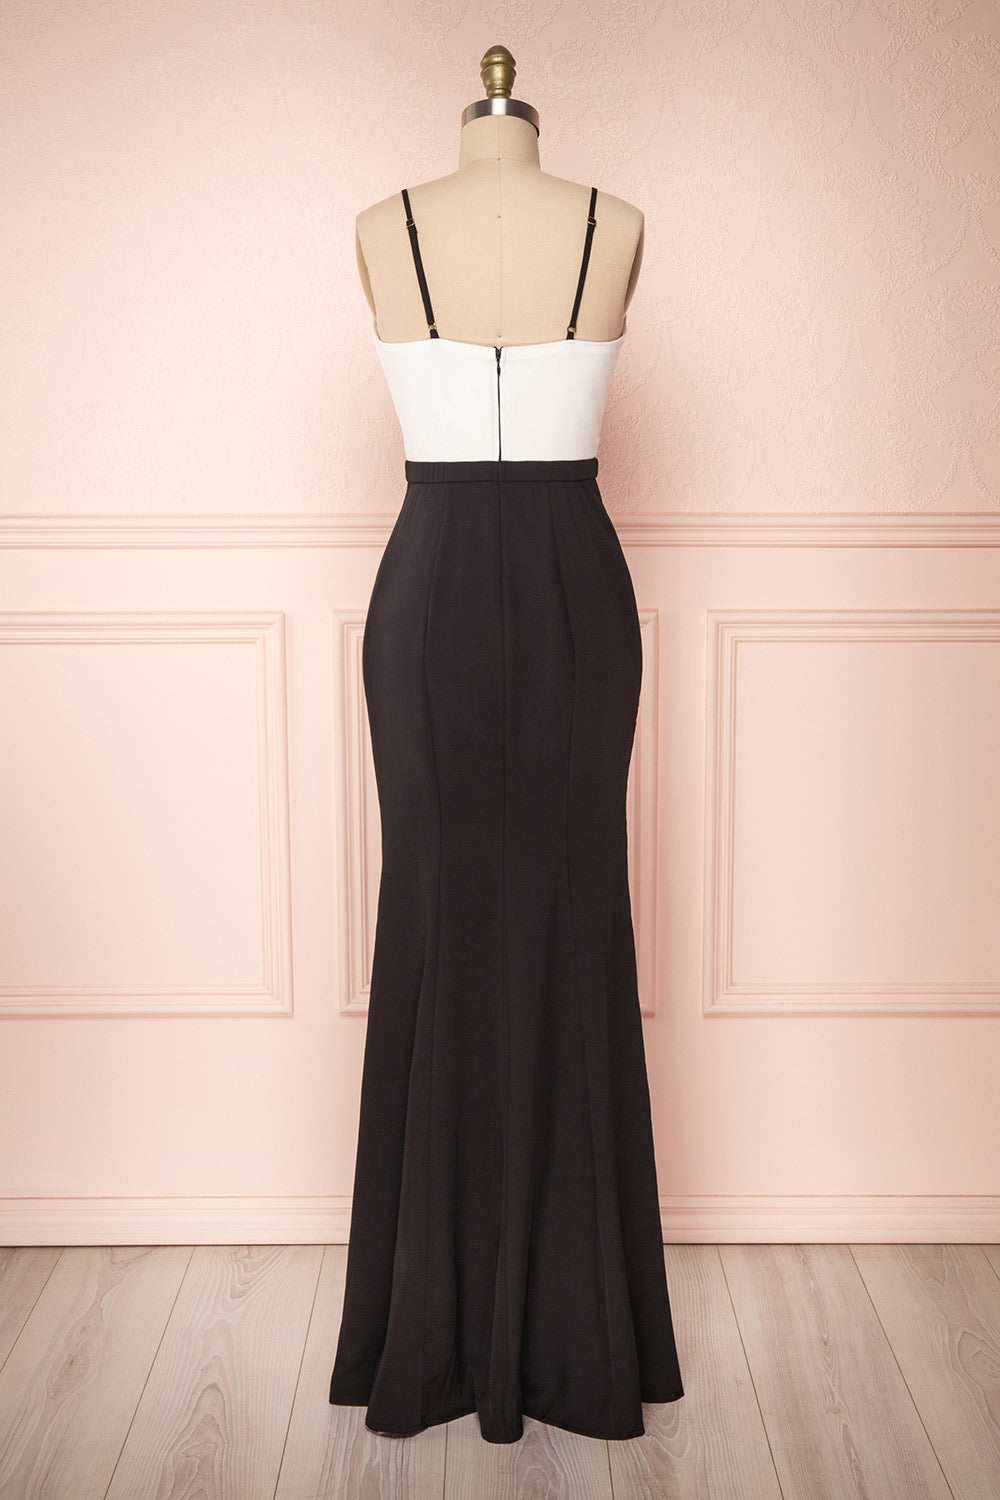 Adriadne Black & White Mermaid Maxi Prom Dress | Boutique 1861 5